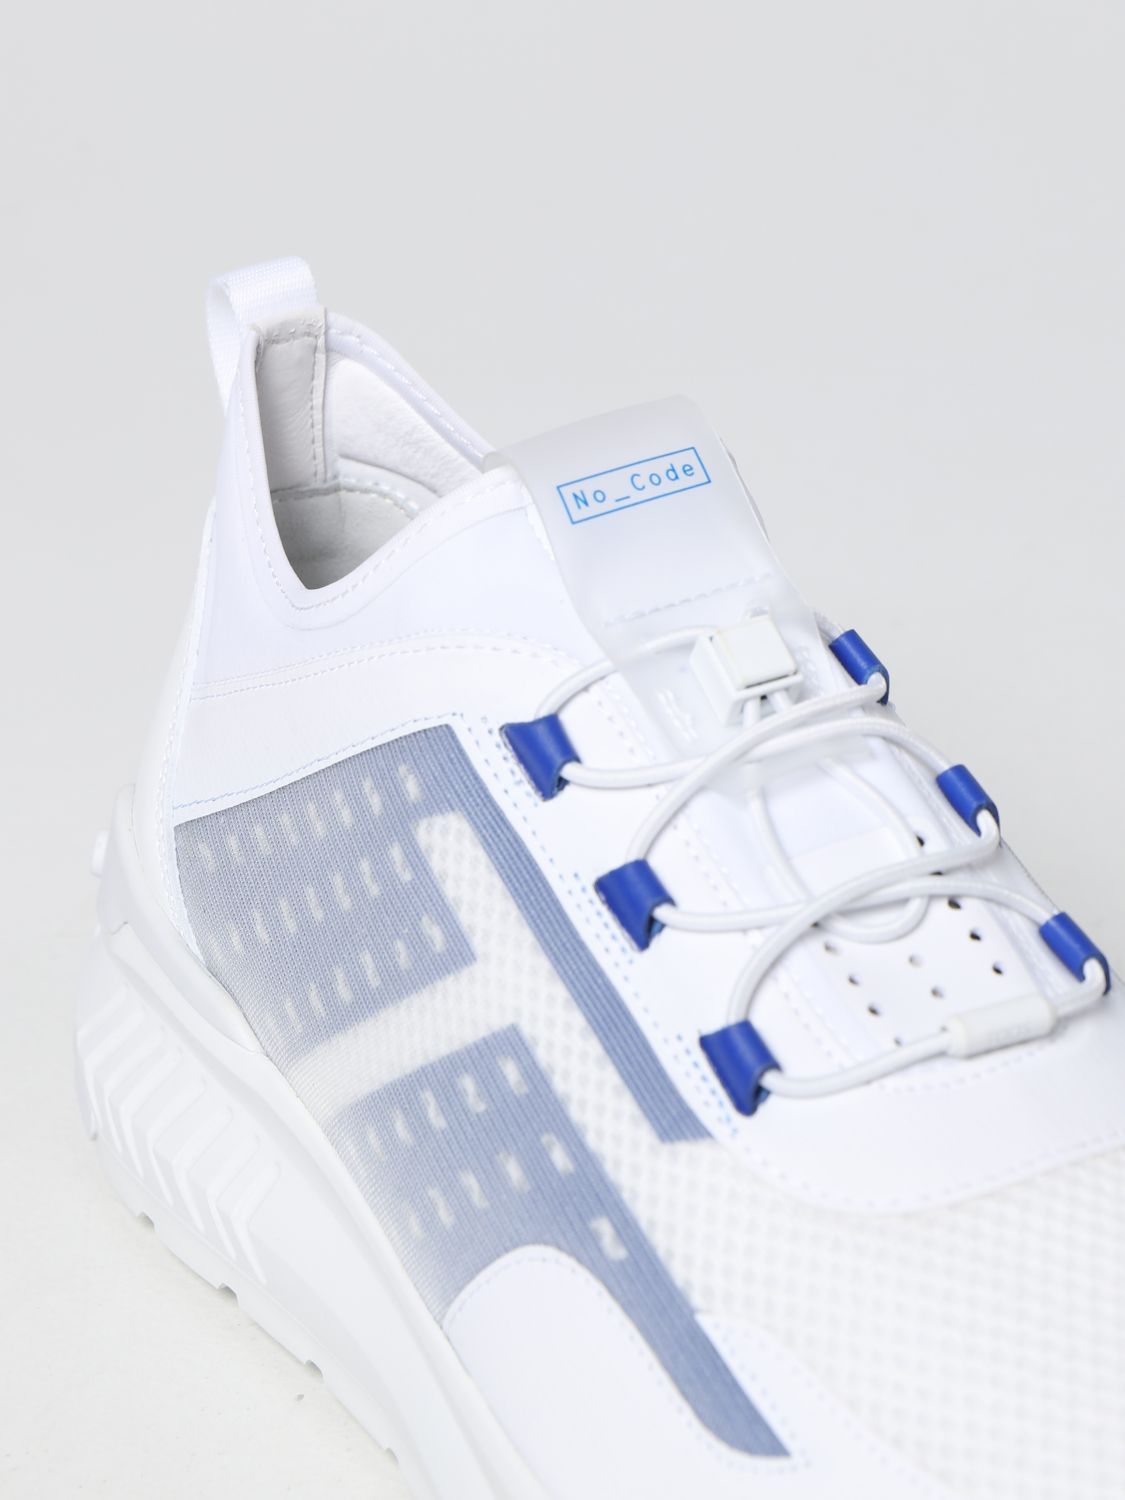 Sneakers Tod's: Sneakers No_Code J Tod's in tessuto tecnico e pelle bianco 4